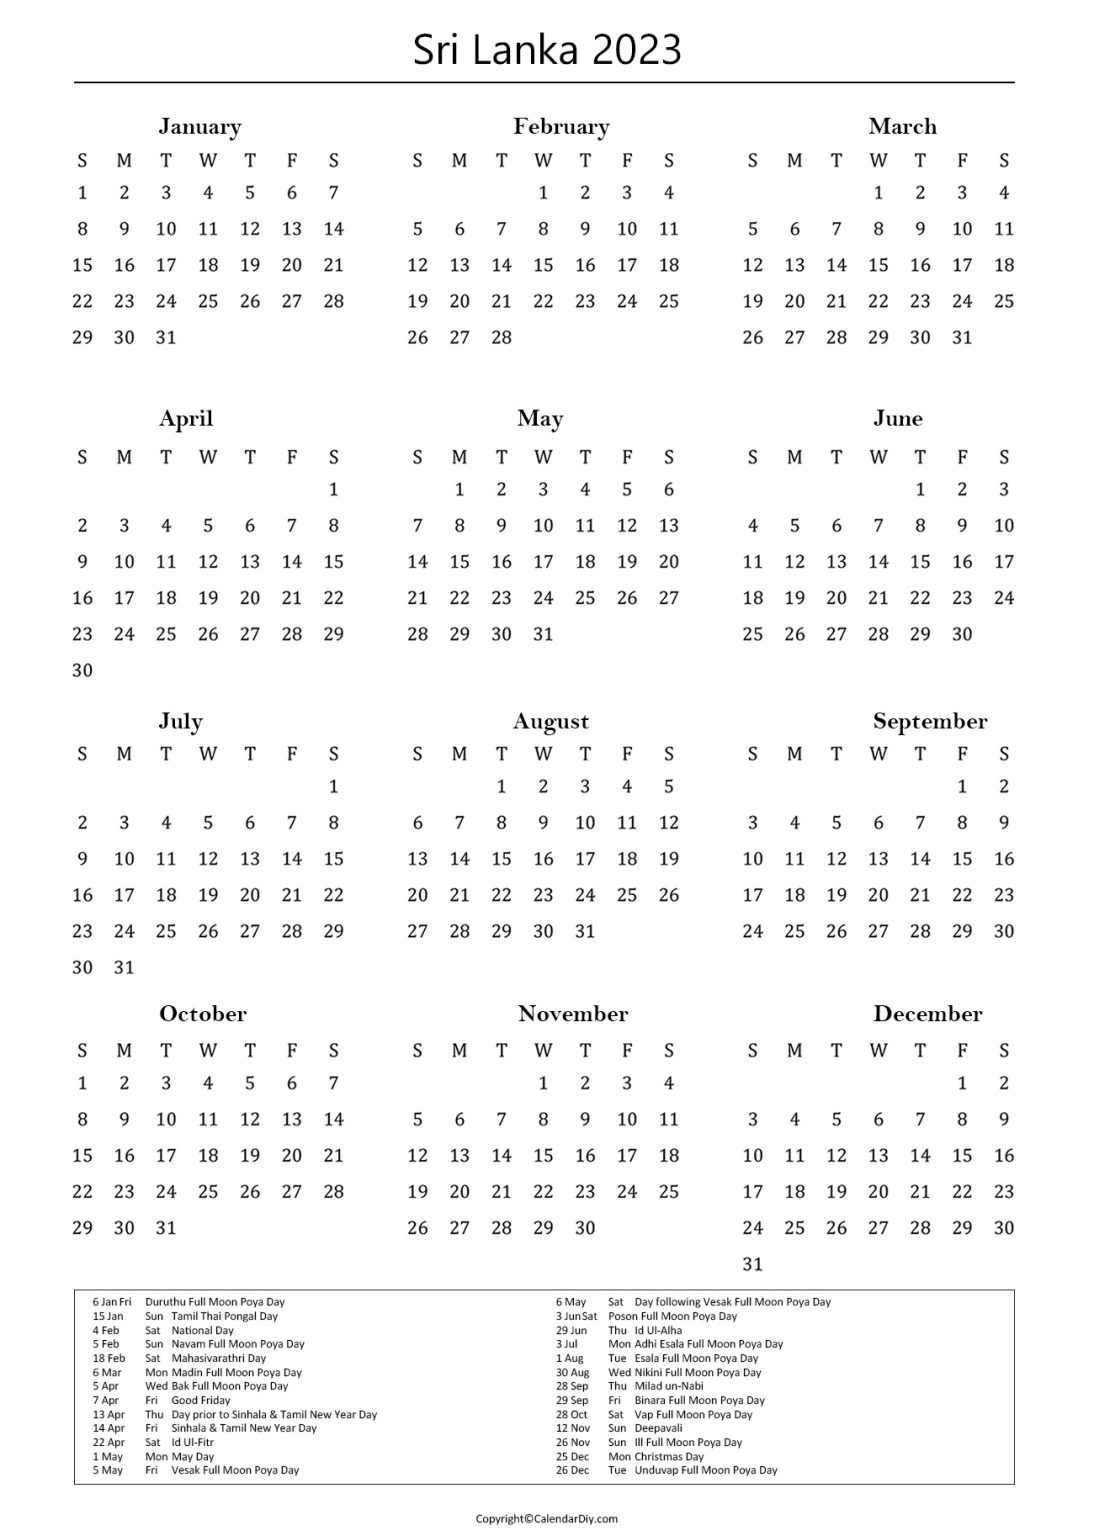 Sri Lanka Public Holidays 2023 | Sri Lanka Calendar 2023